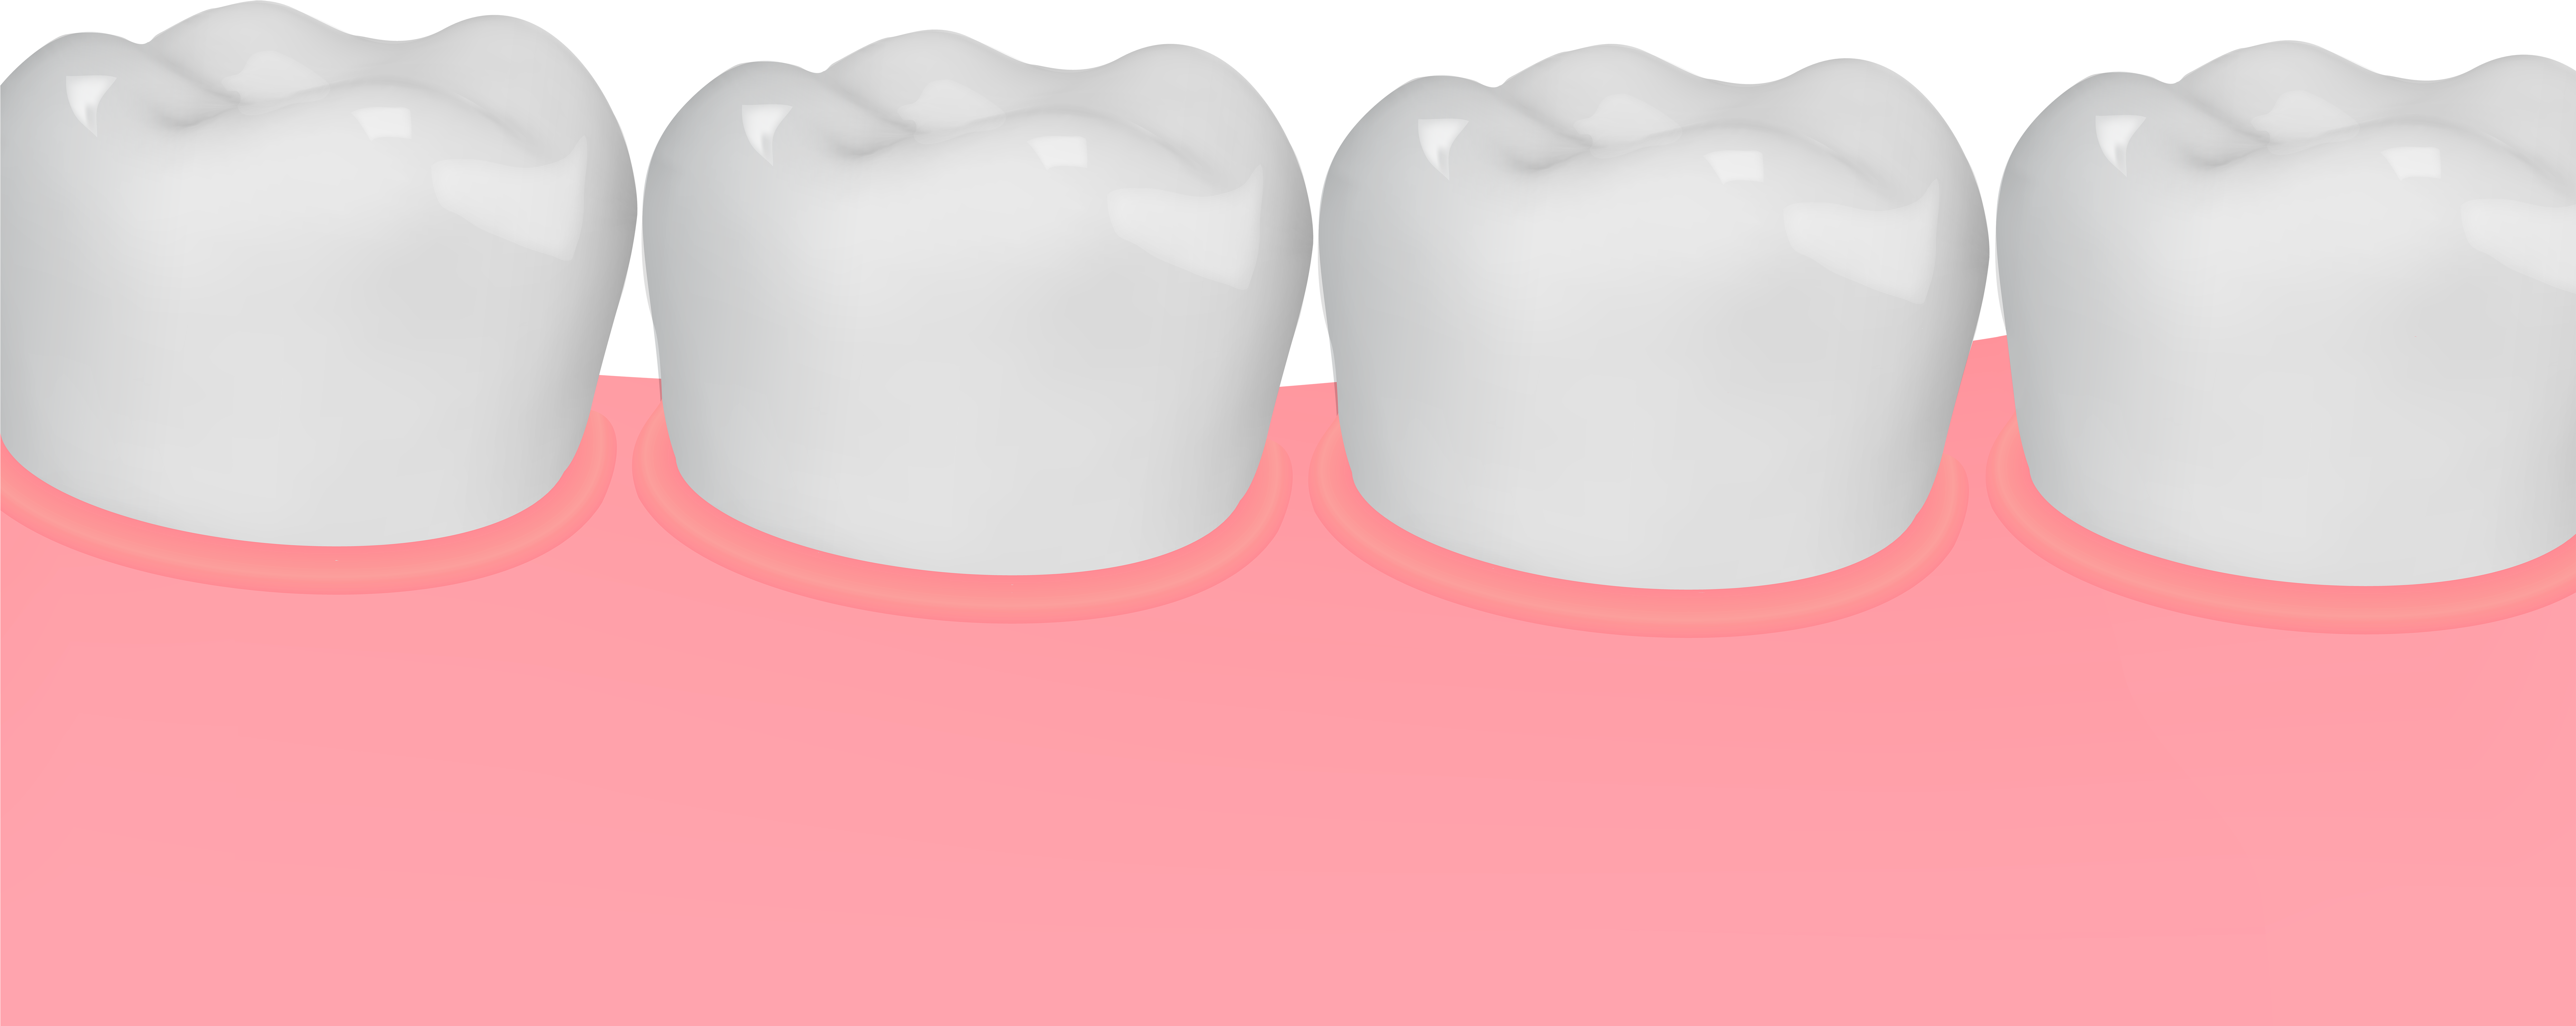 Gum And Teeth Png Clip Art Image - Tongue (8000x3243), Png Download